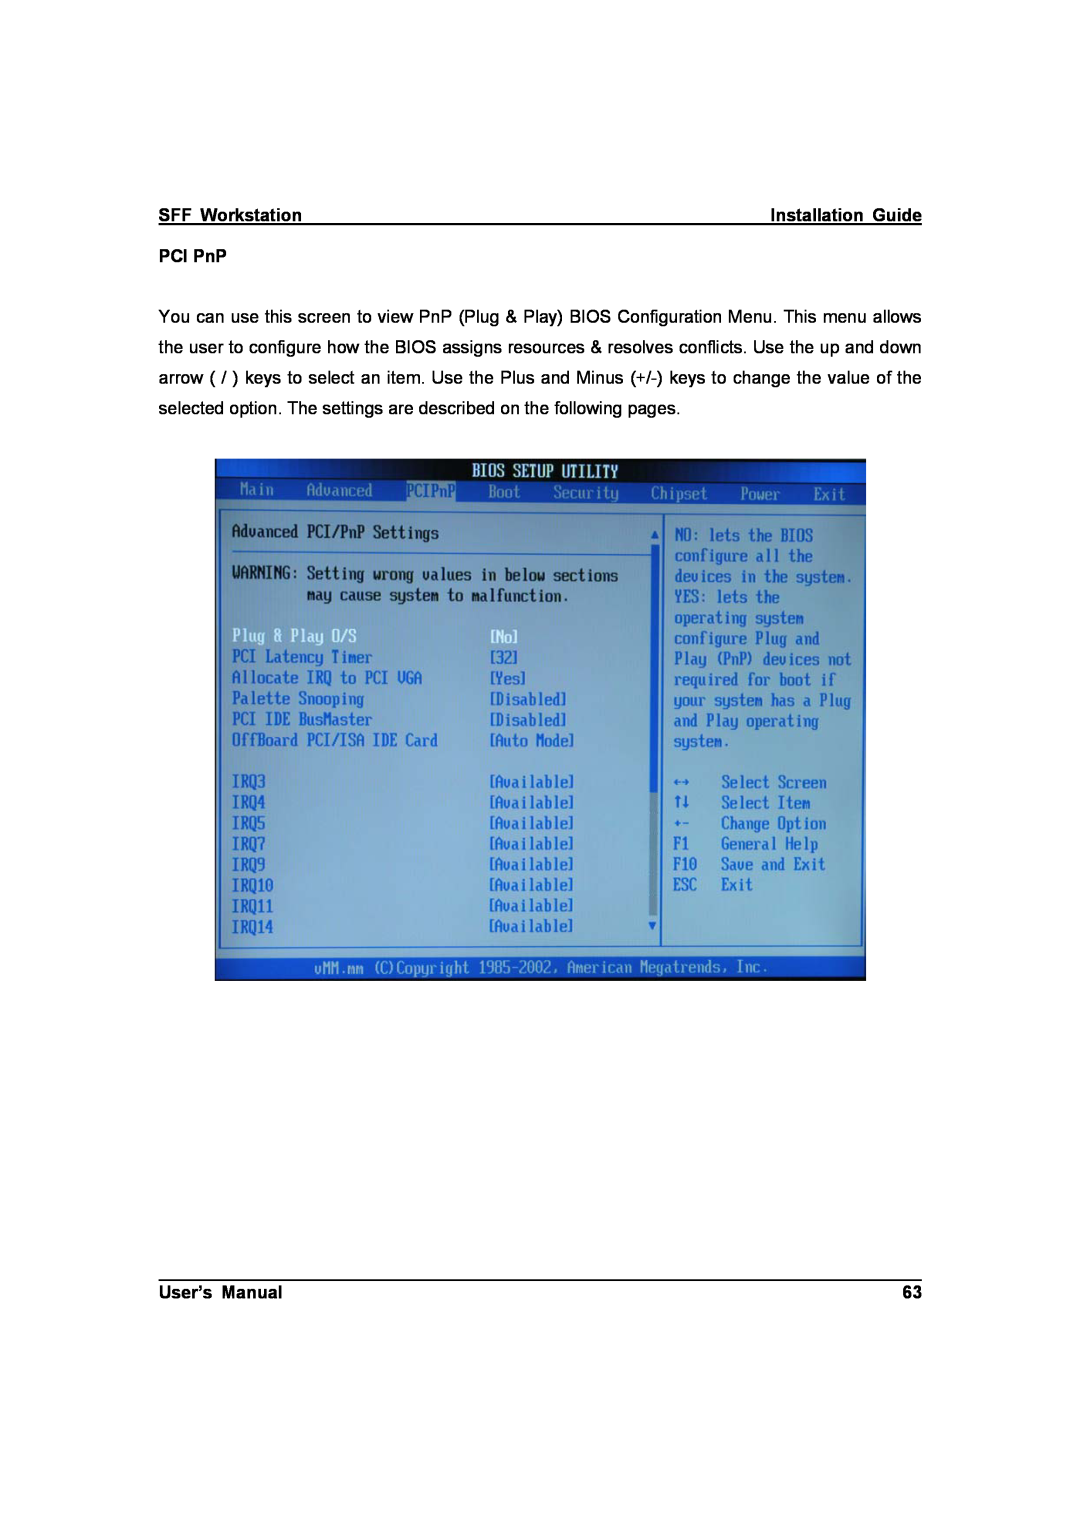 IBM ZMAXdp user manual SFF Workstation, PCI PnP, User’s Manual, Installation Guide 